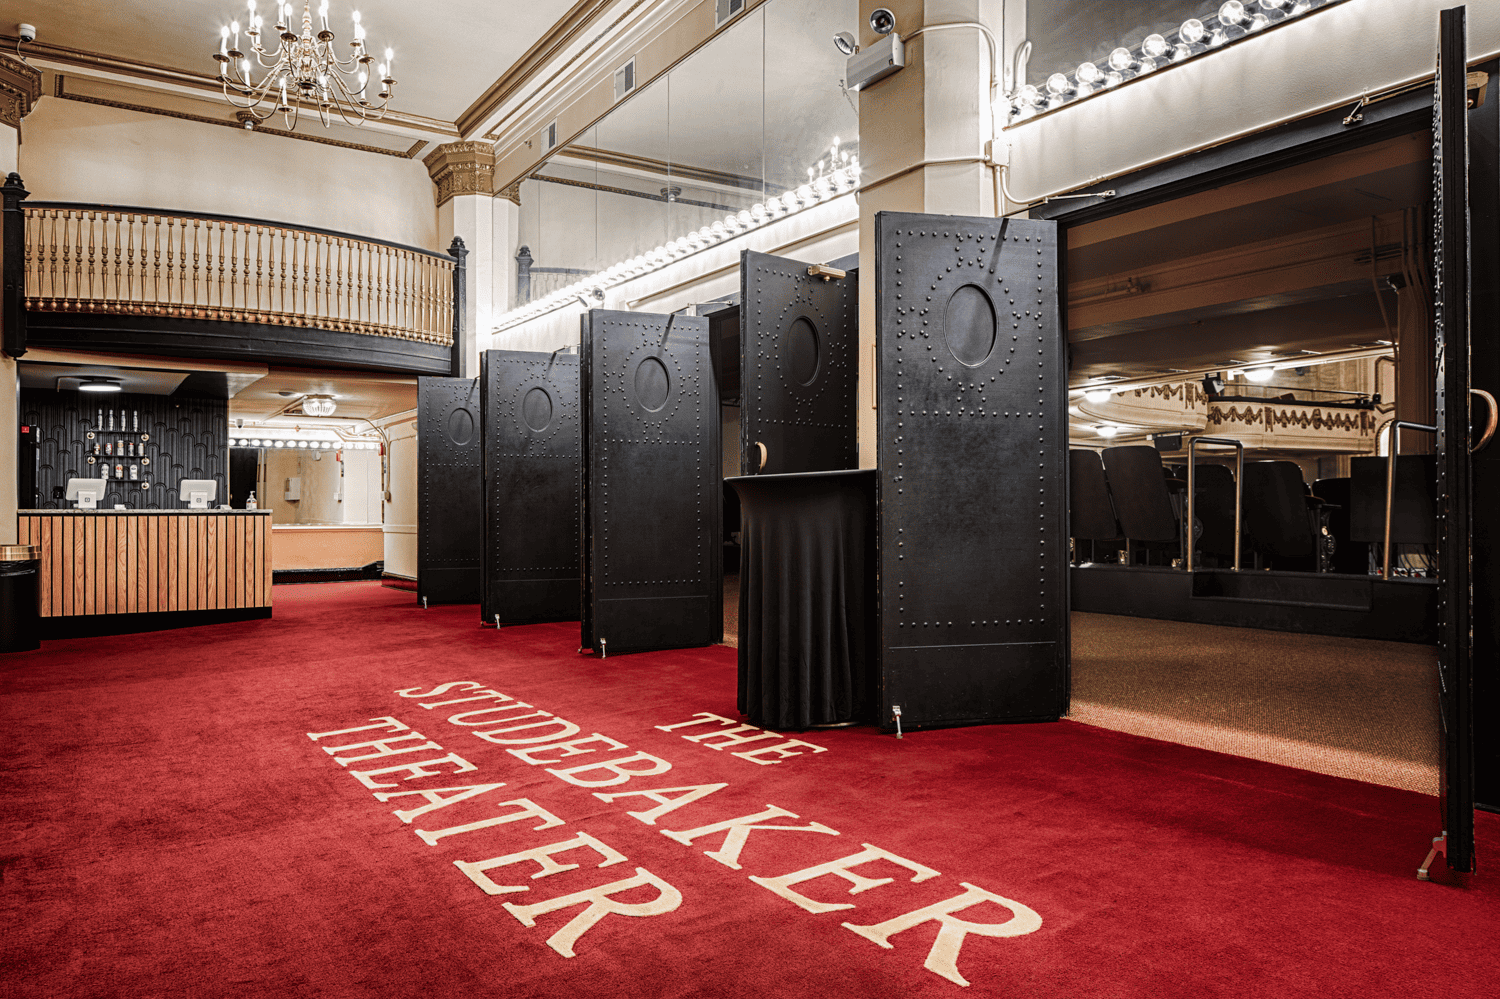 Image Description: The Studebaker Theater lobby.